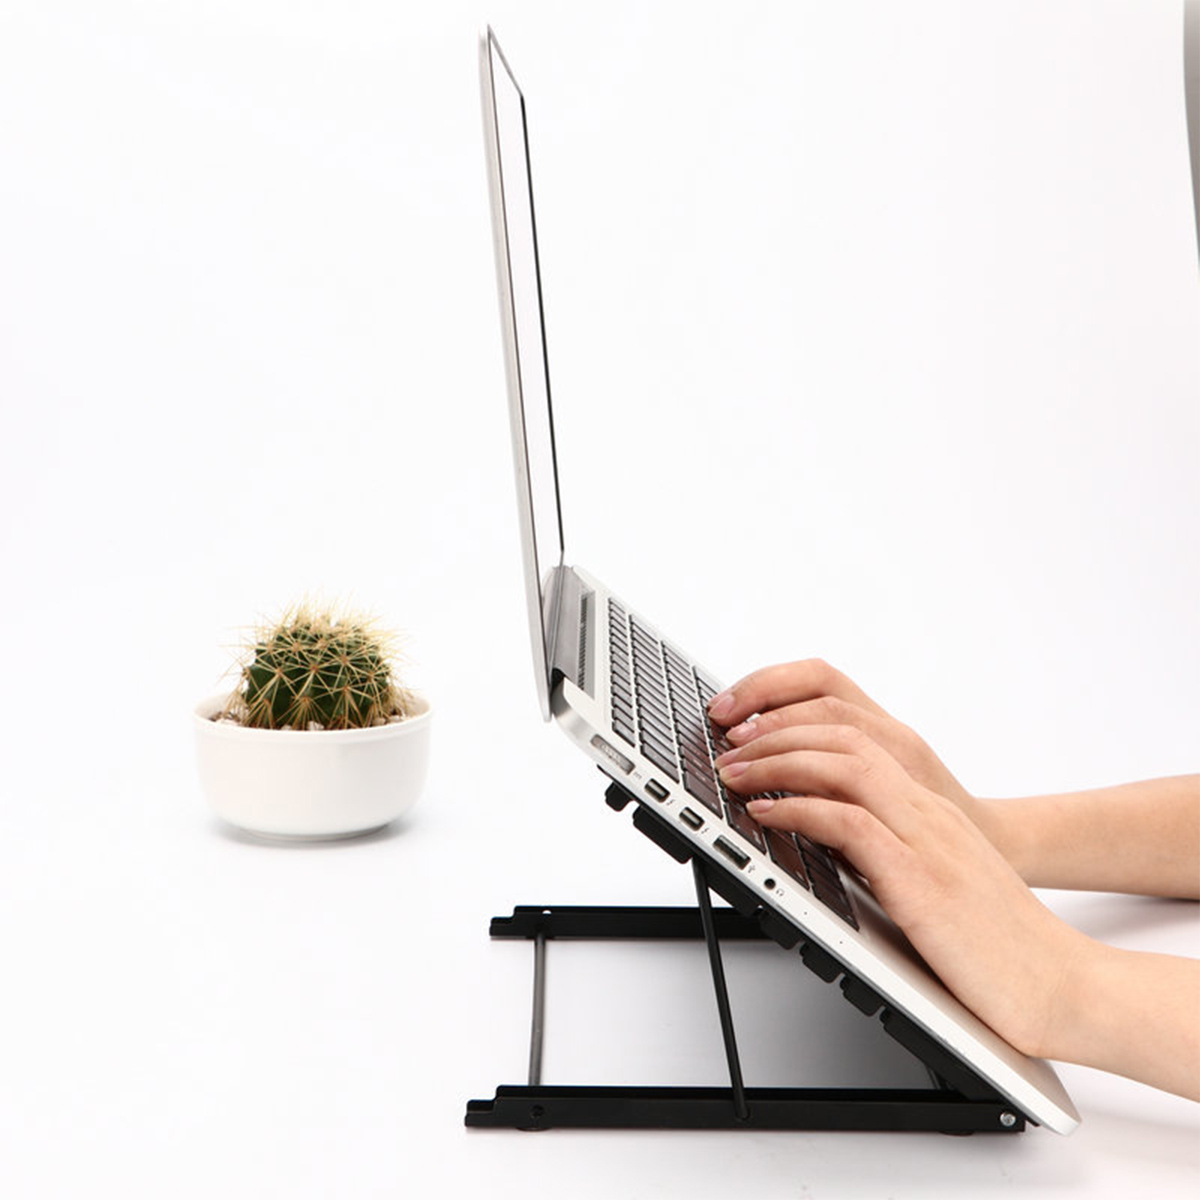 Portable-Adjustable-Angle-Heat-Dissipation-Mesh-Telecommuting-Online-Learning-Desktop-Tablet-Laptop--1673670-21